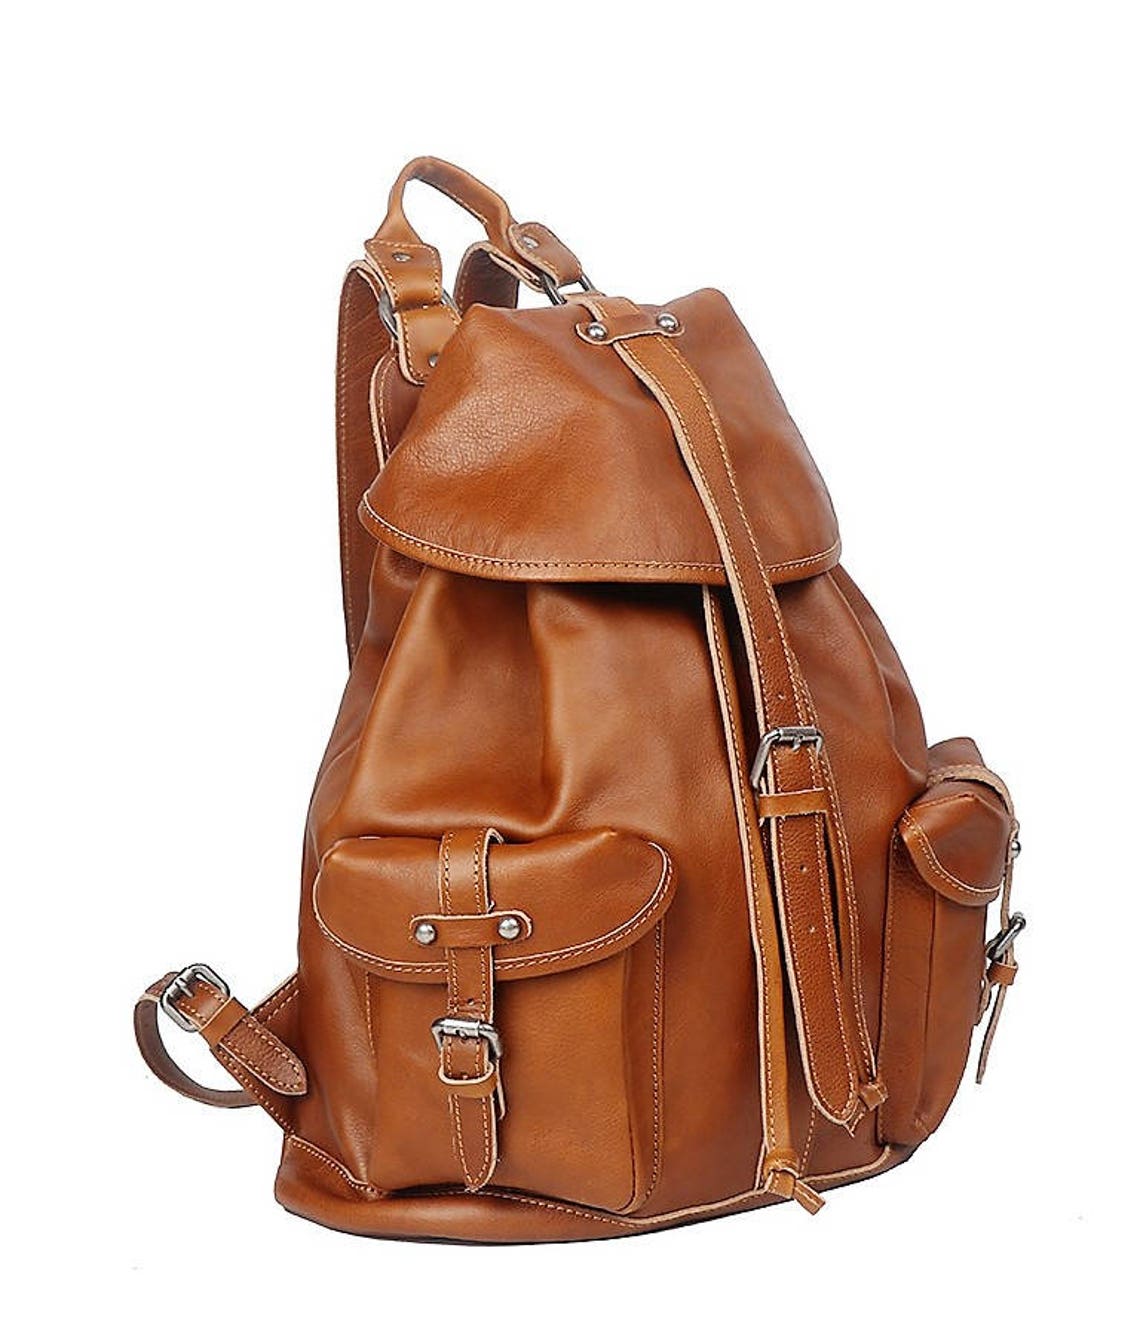 Leather Backpack Diaper Bag Backpack Diaper Bag Leather | Etsy